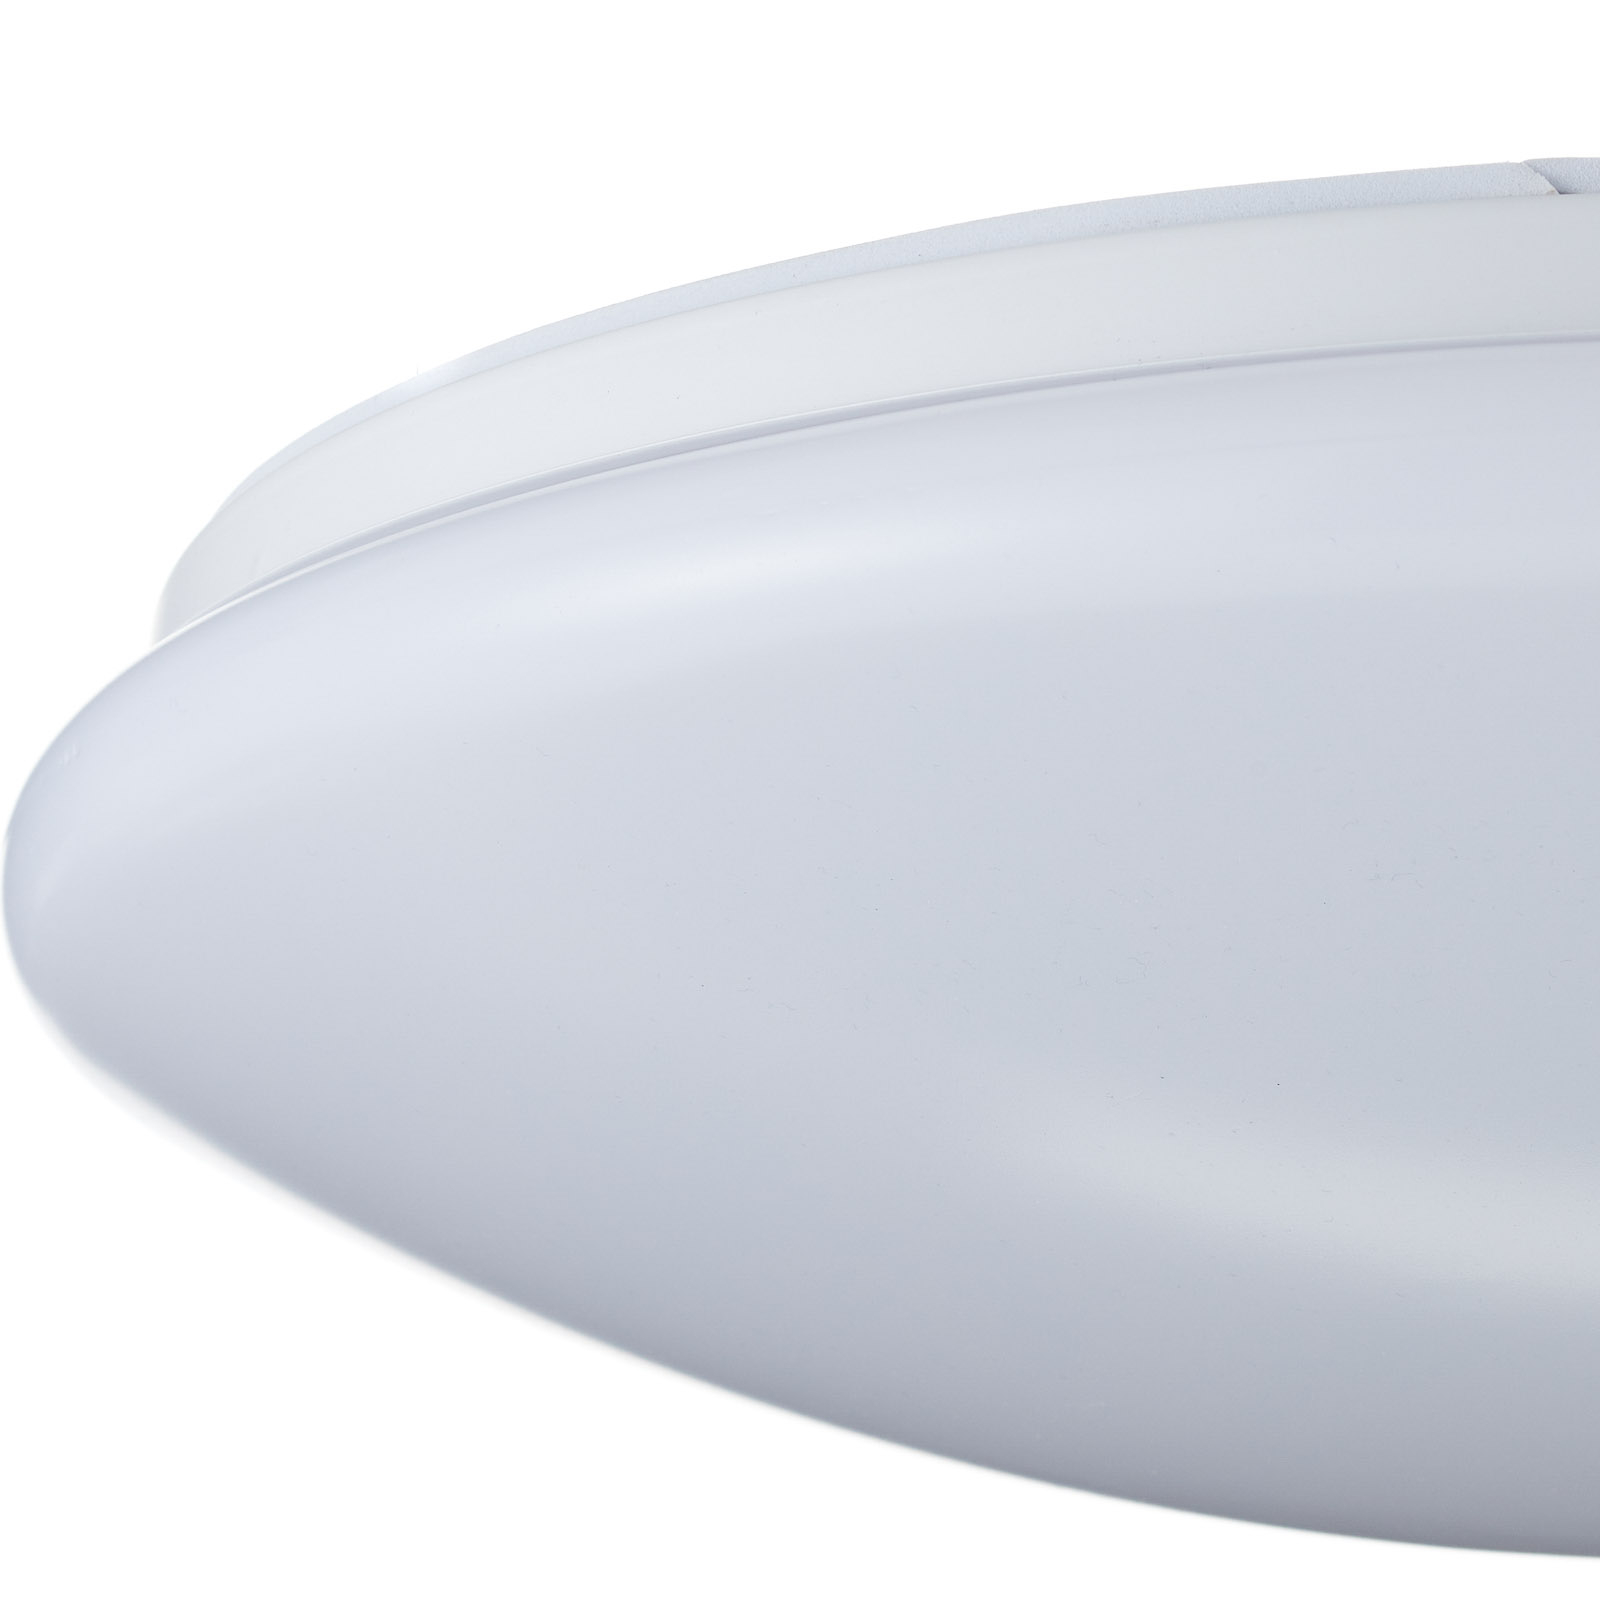 Altona LED ceiling light, Ø 38.5cm 1,950lm 4,000K